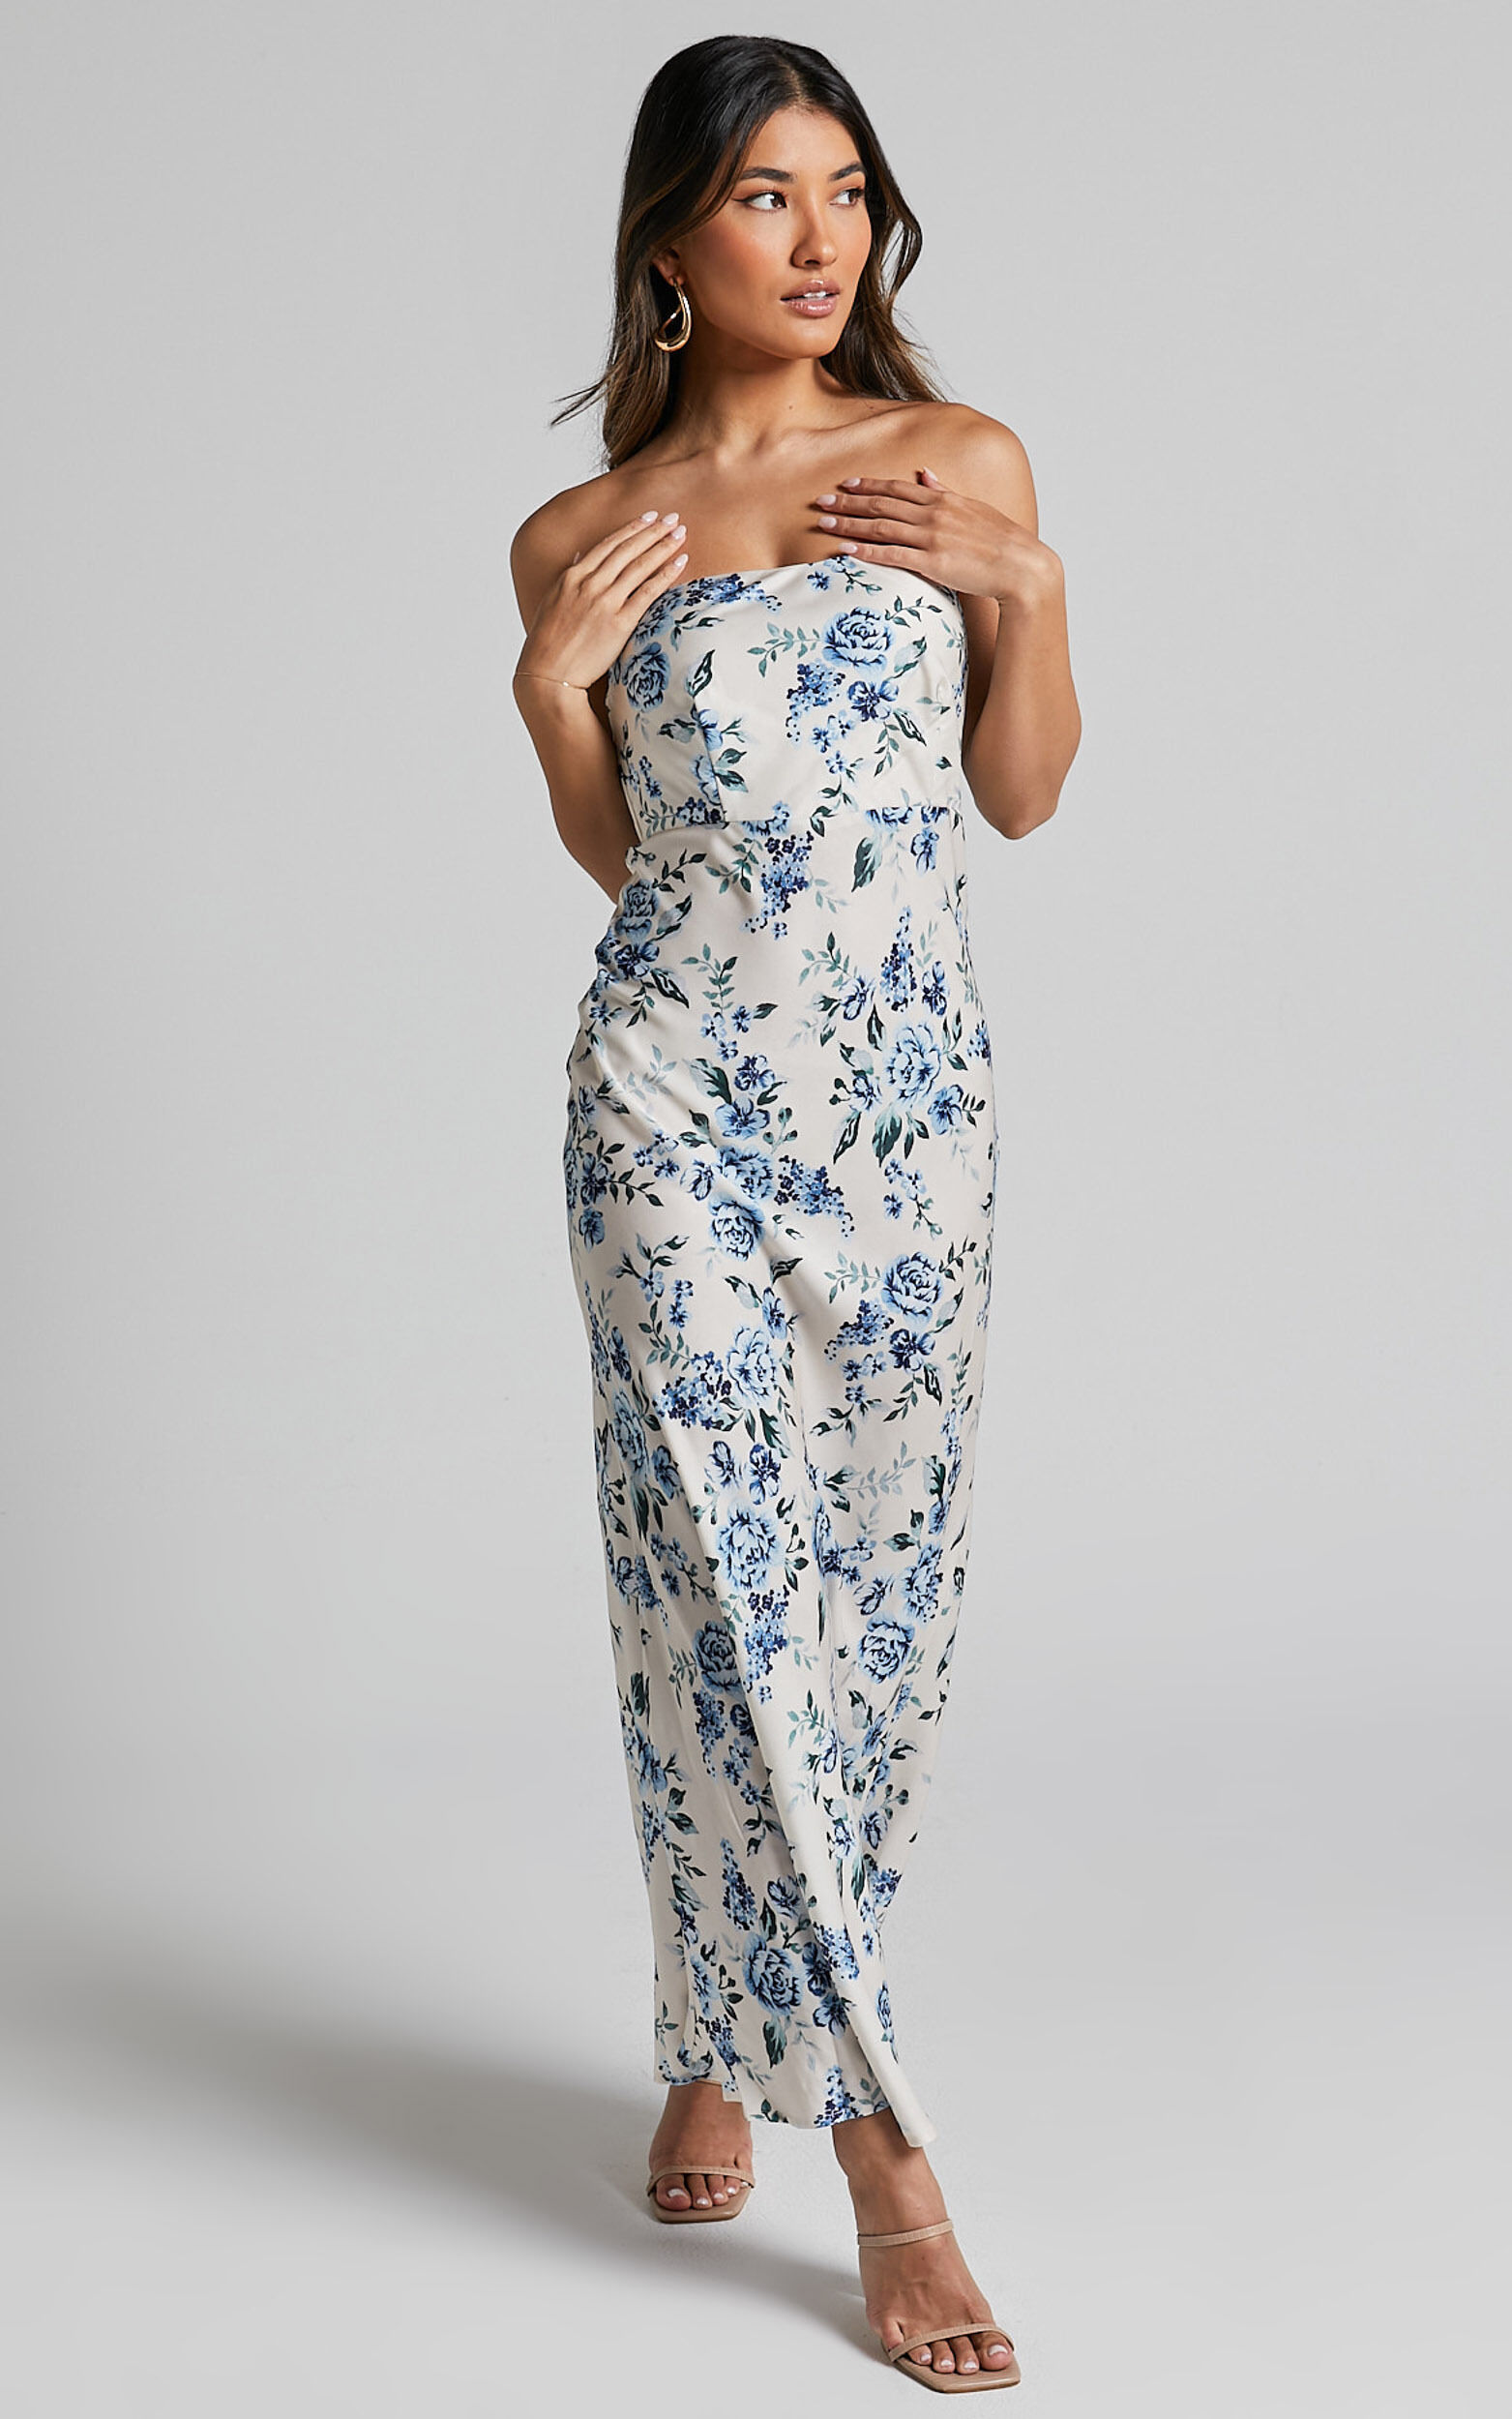 Bellene Maxi Dress - Satin Bias Cut Strapless Slip Dress in White and Blue Floral - 04, WHT1